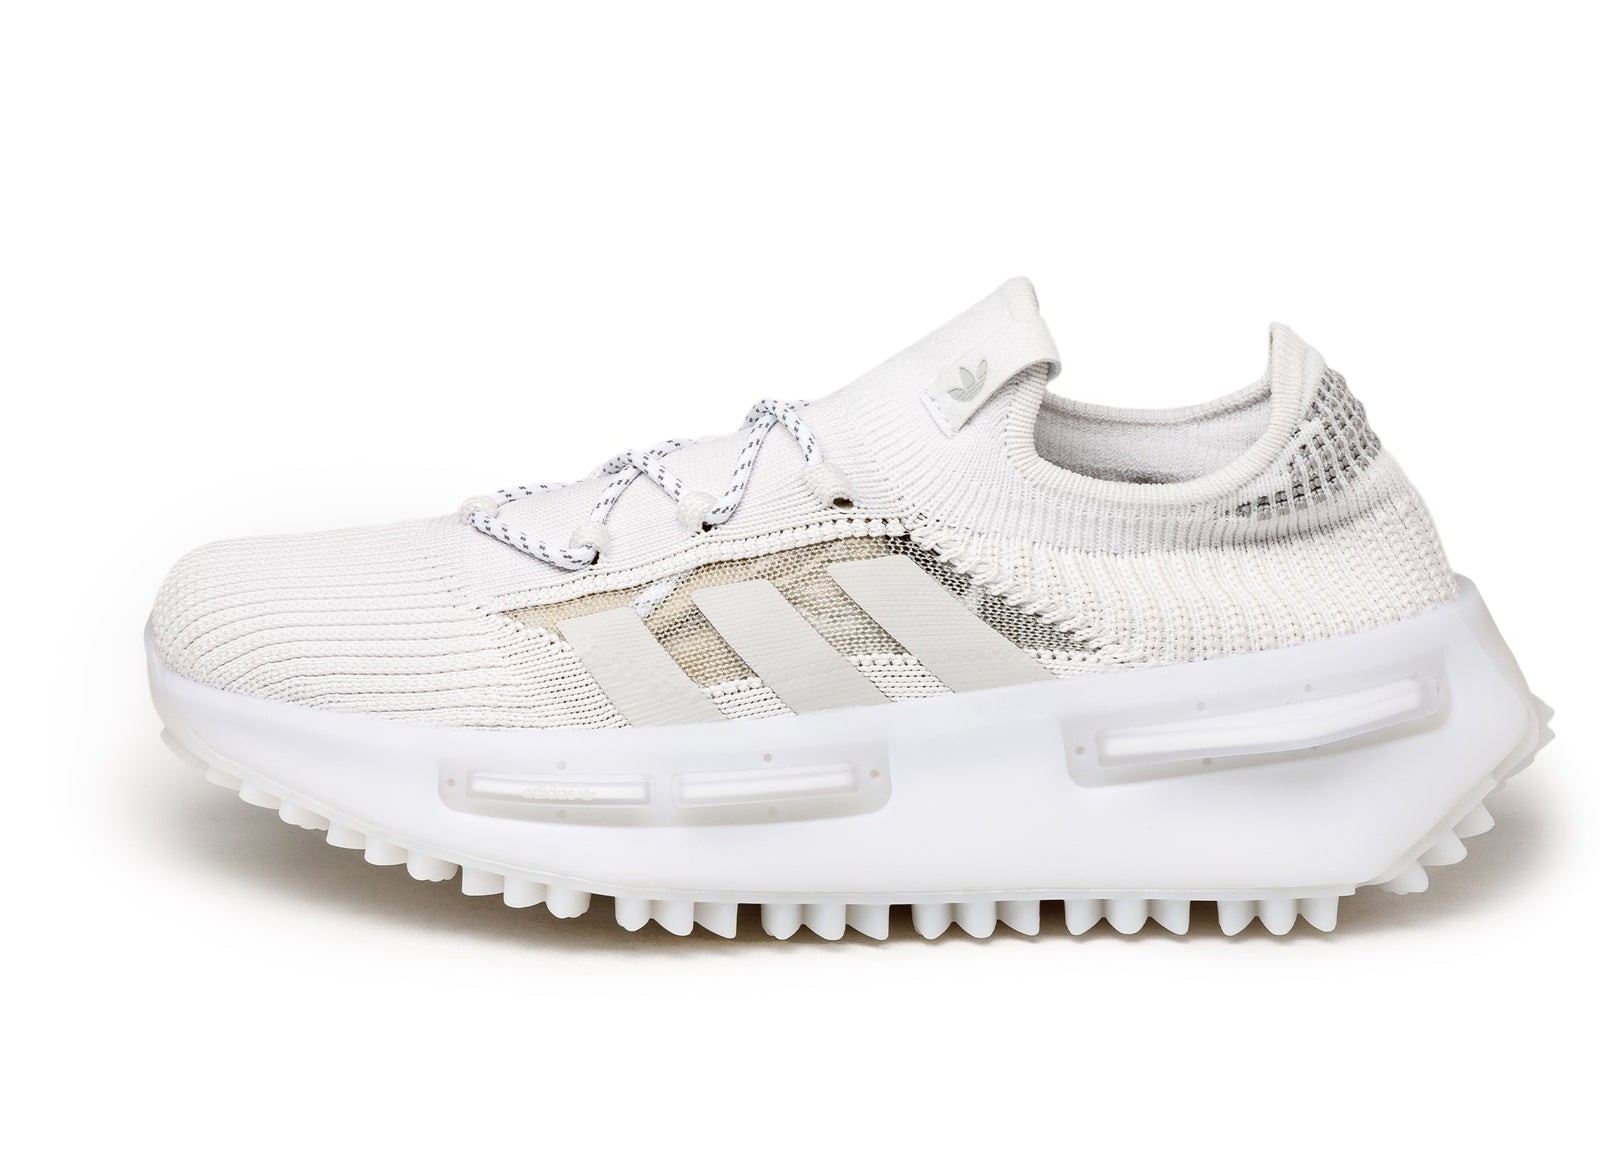 Adidas NMD_S1
Footwear White / Grey One